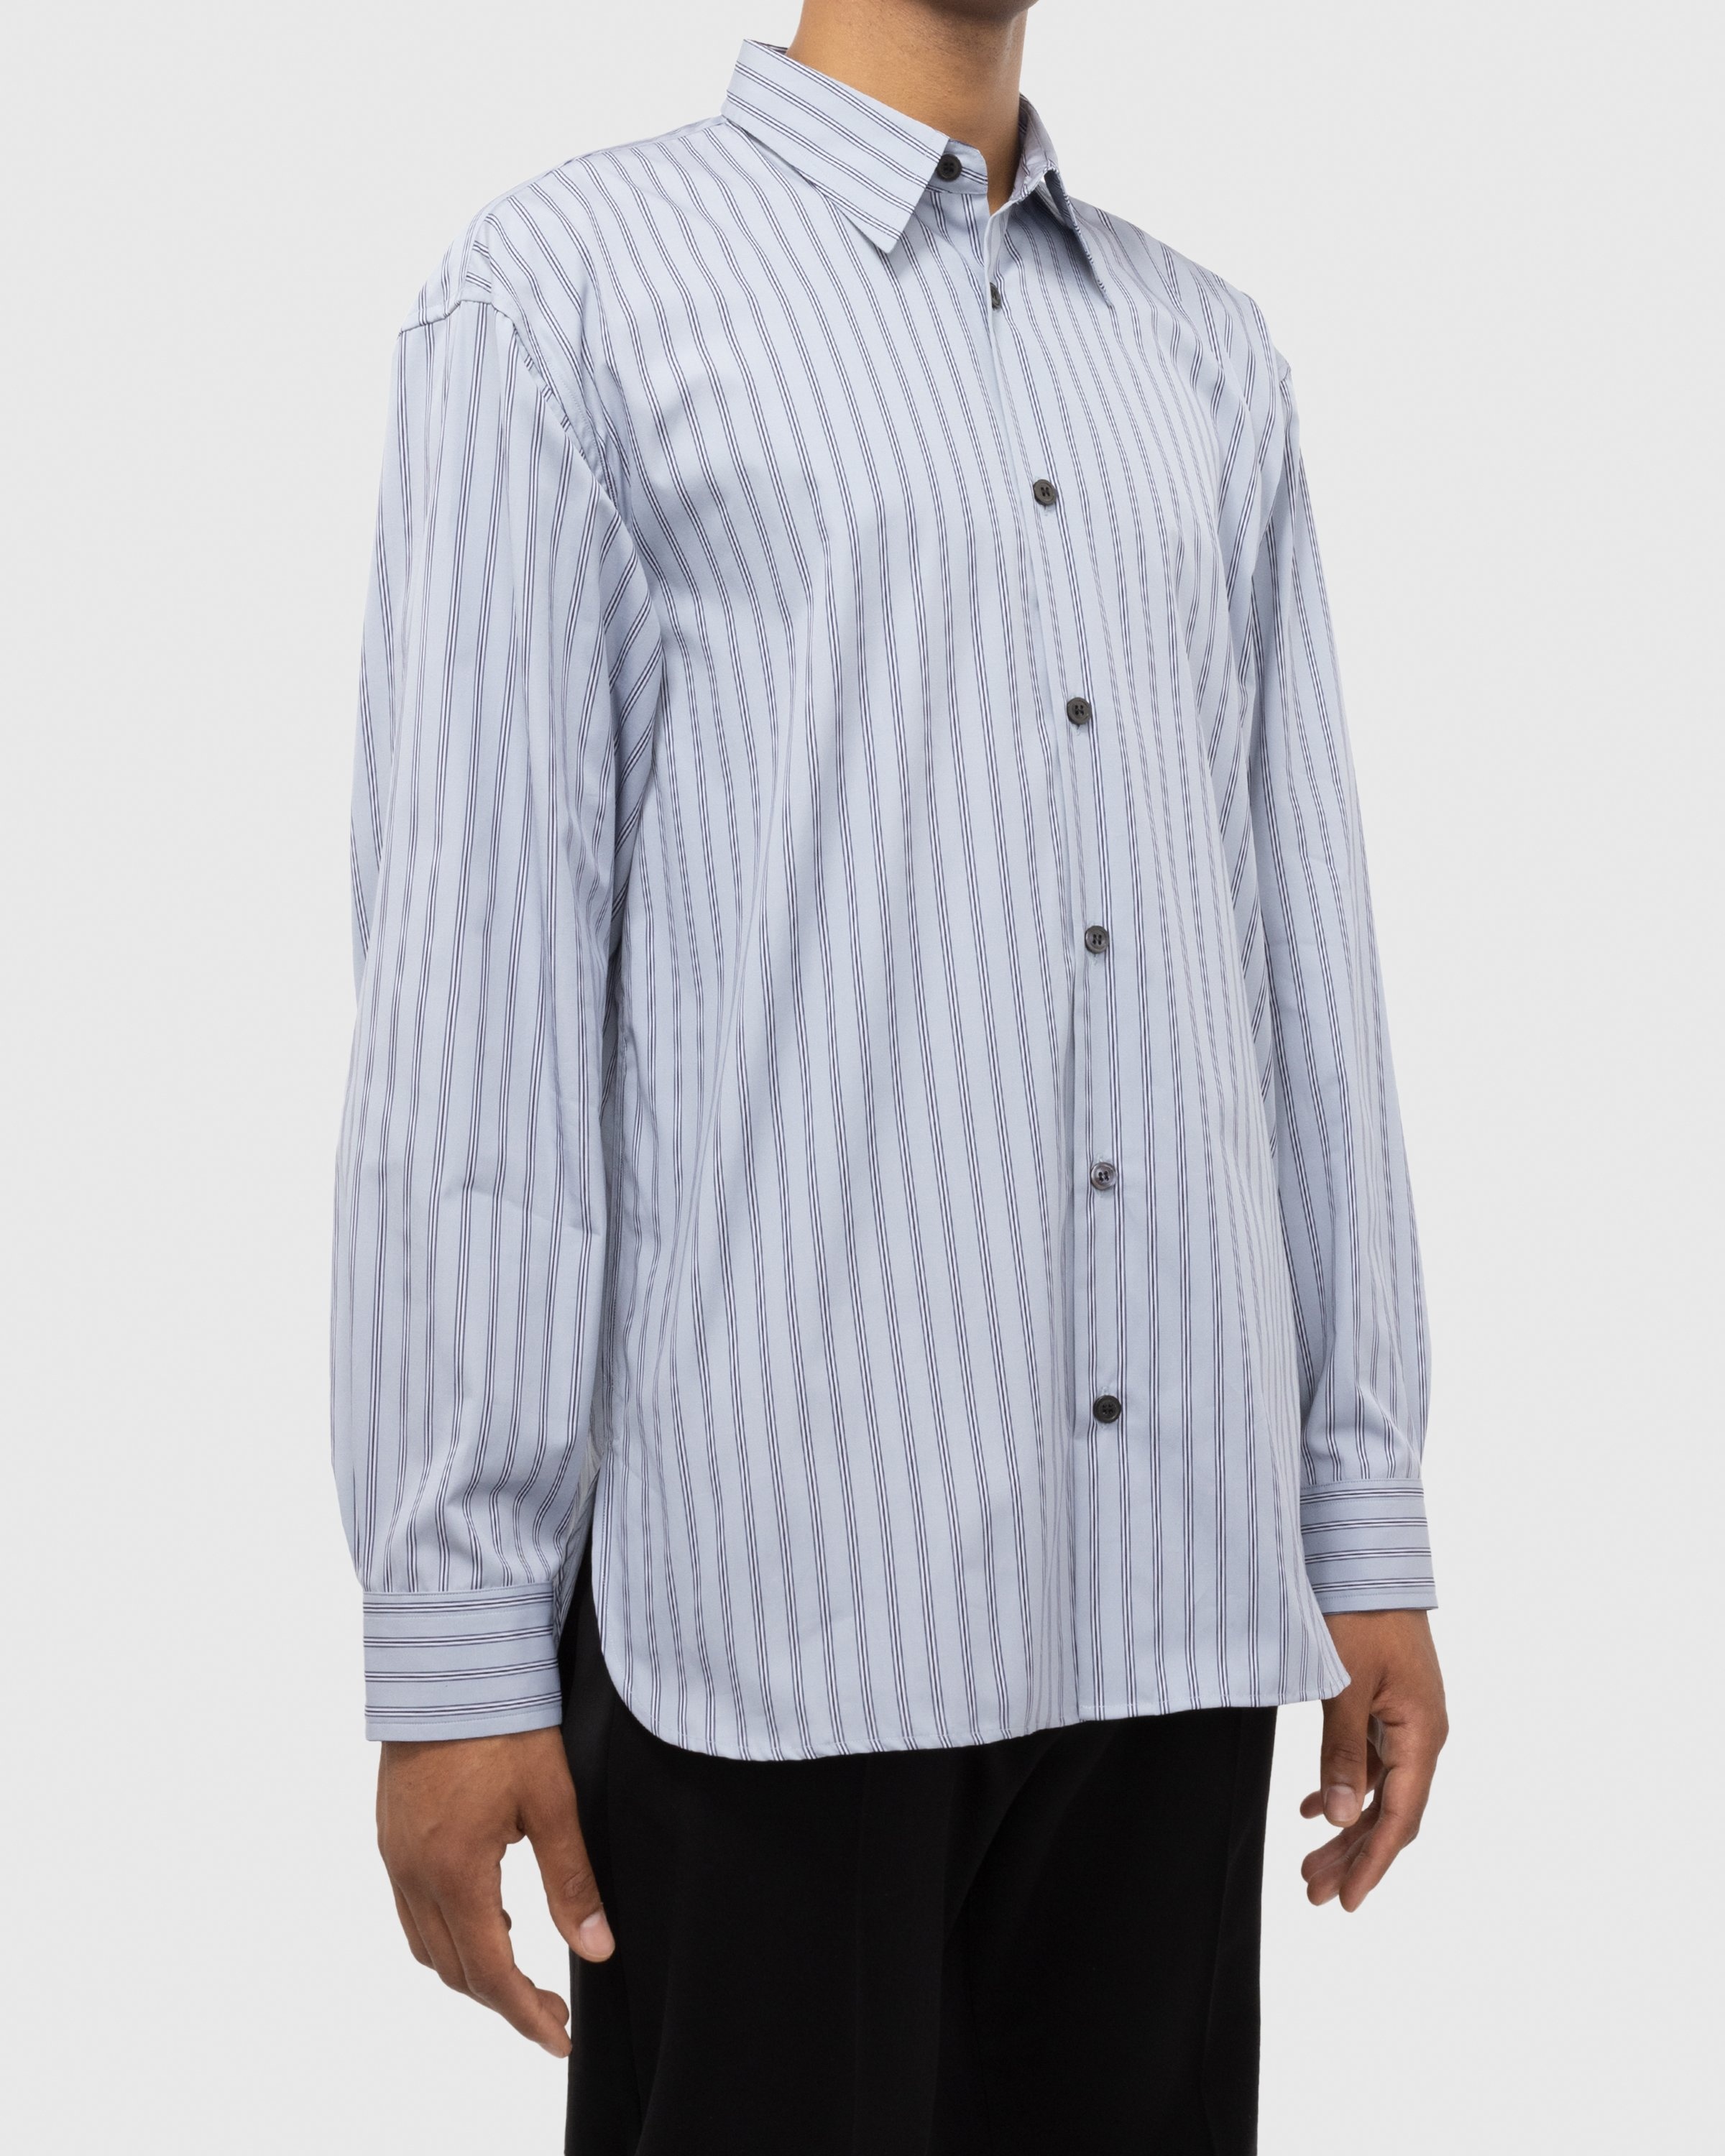 Dries van Noten – Croom Shirt Blue - Longsleeve Shirts - Blue - Image 3